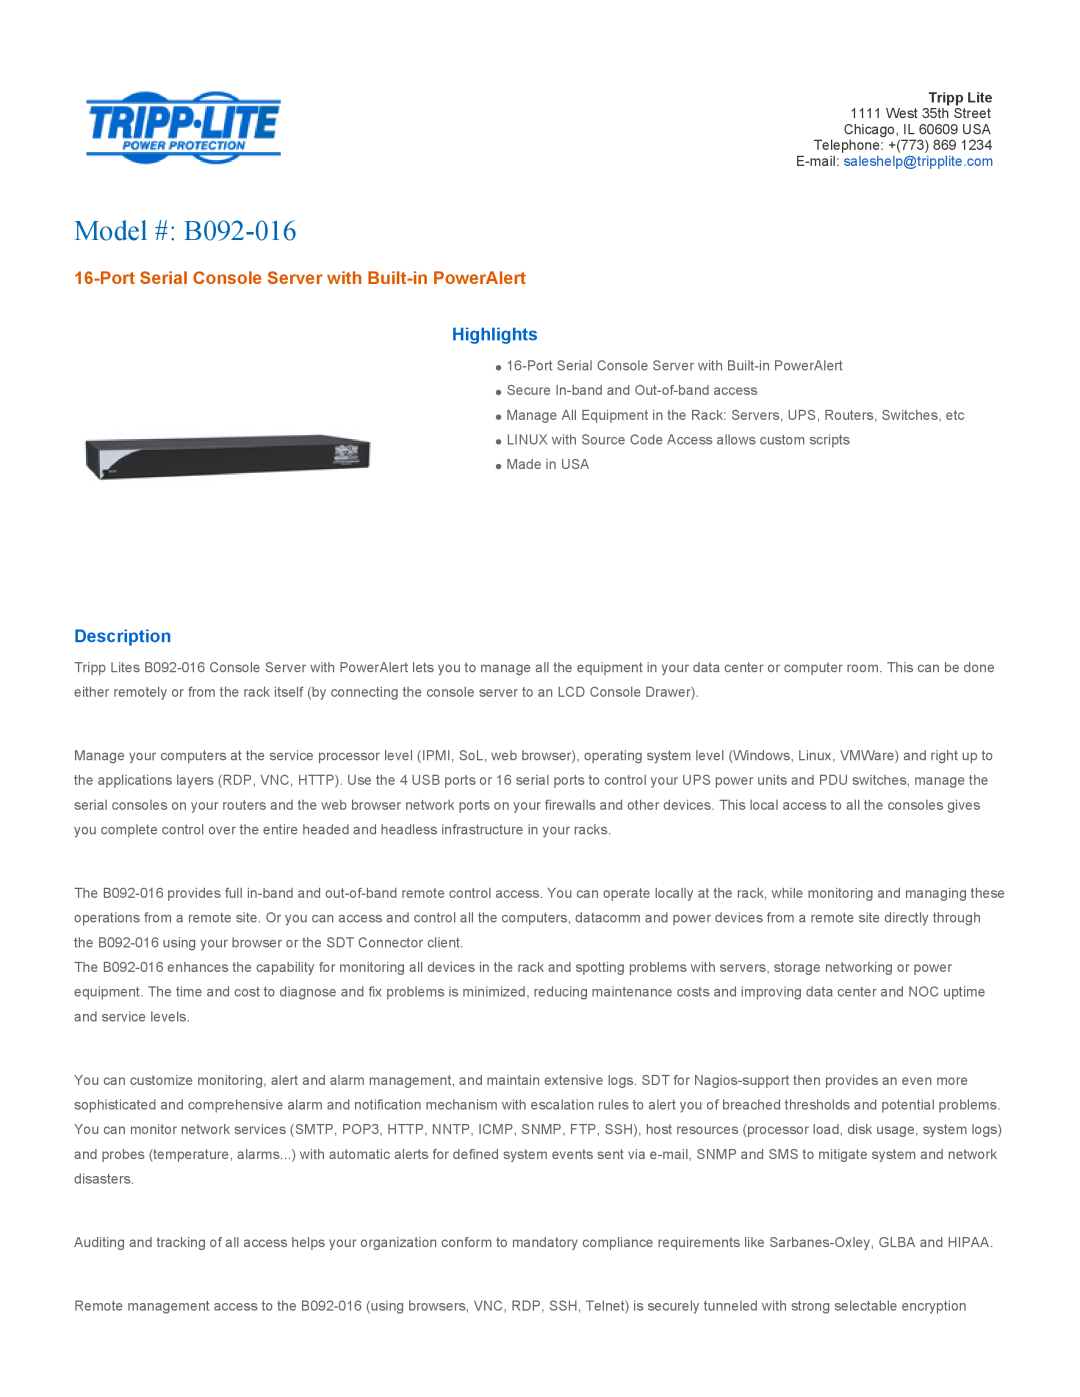 Tripp Lite manual Highlights, Description, Model # B092-016, Port Serial Console Server with Built-in PowerAlert 